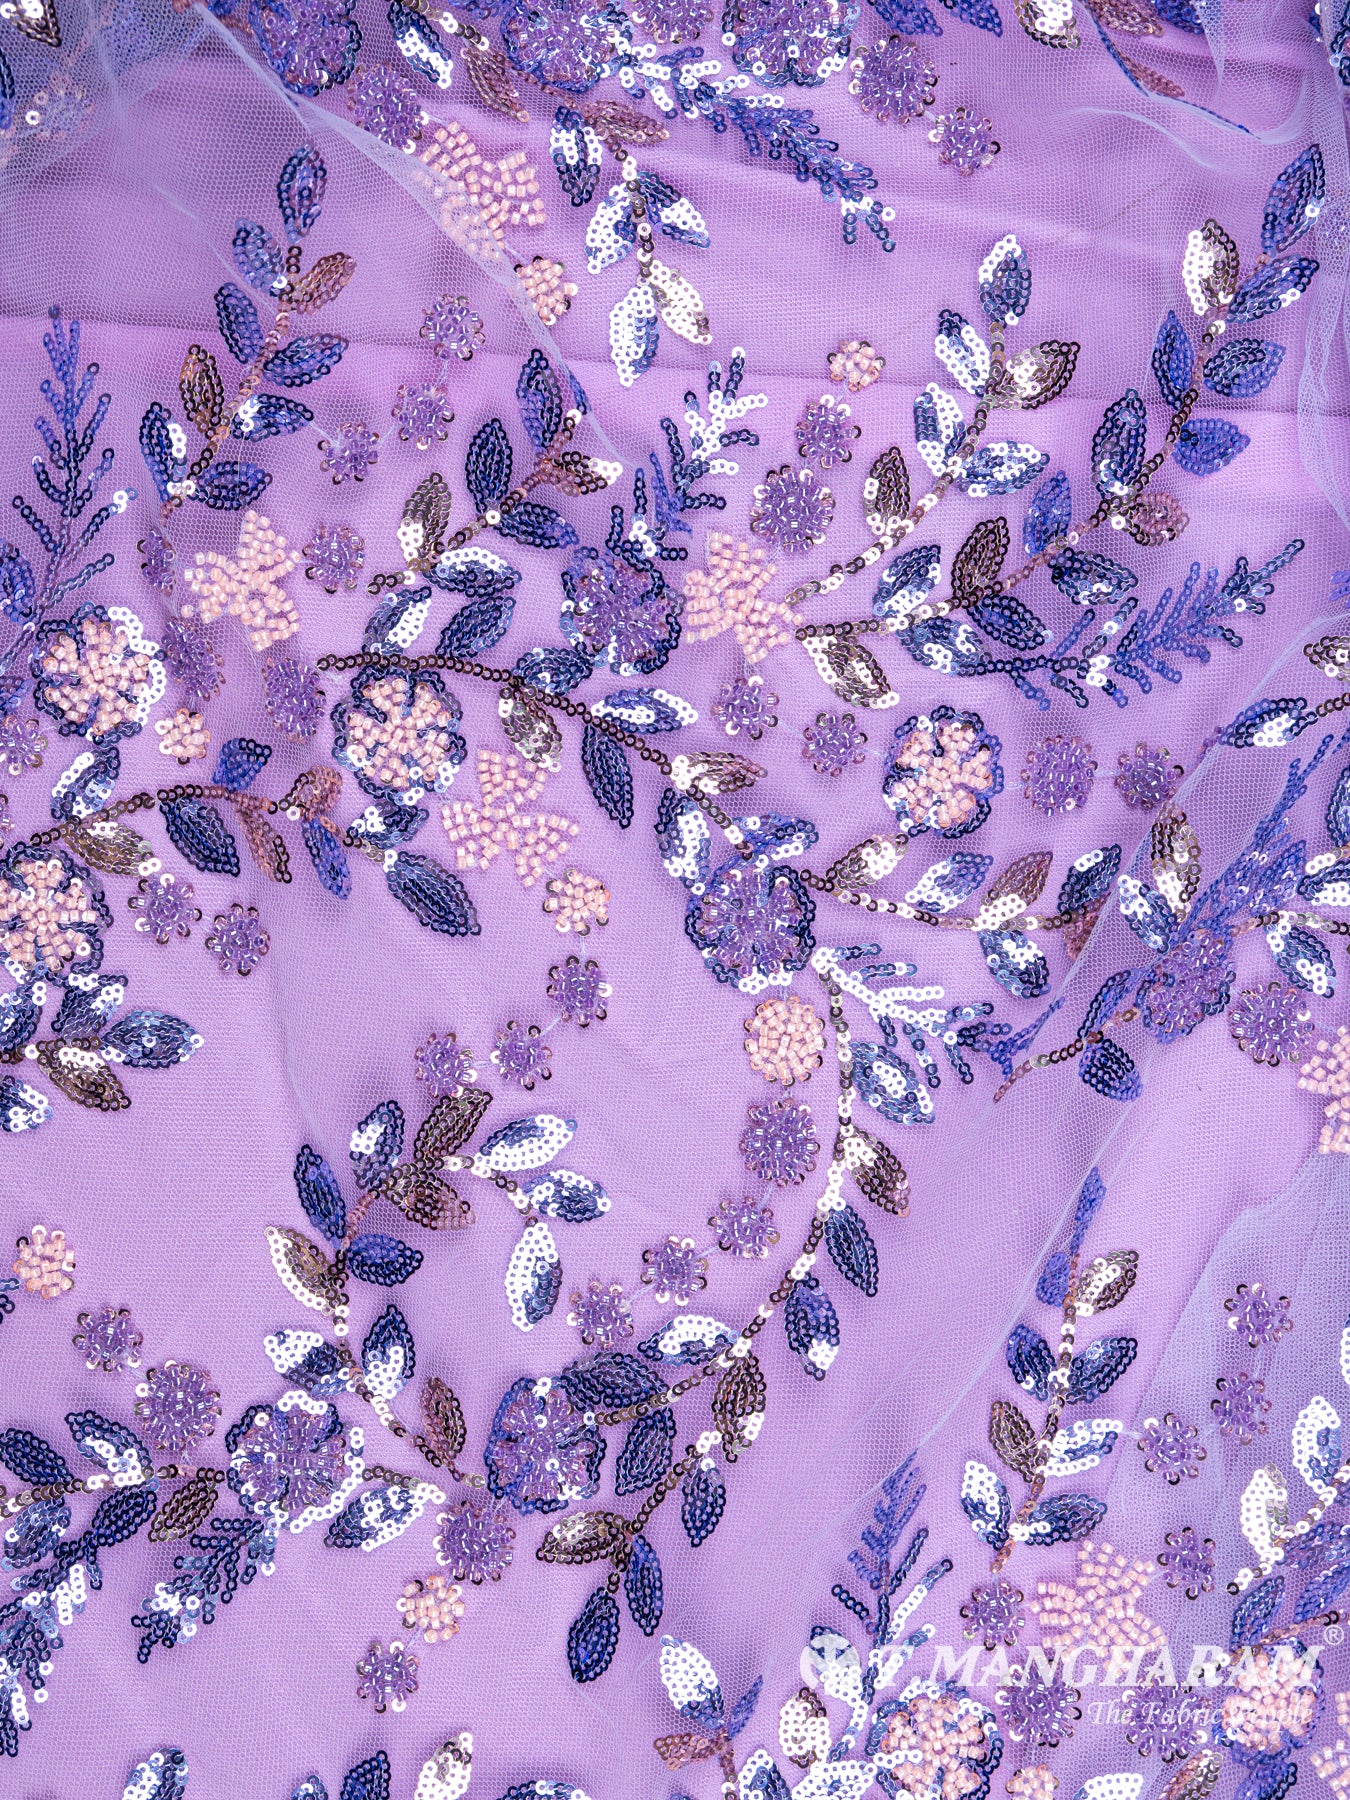 Violet Fancy Net Fabric - EA2044 view-3